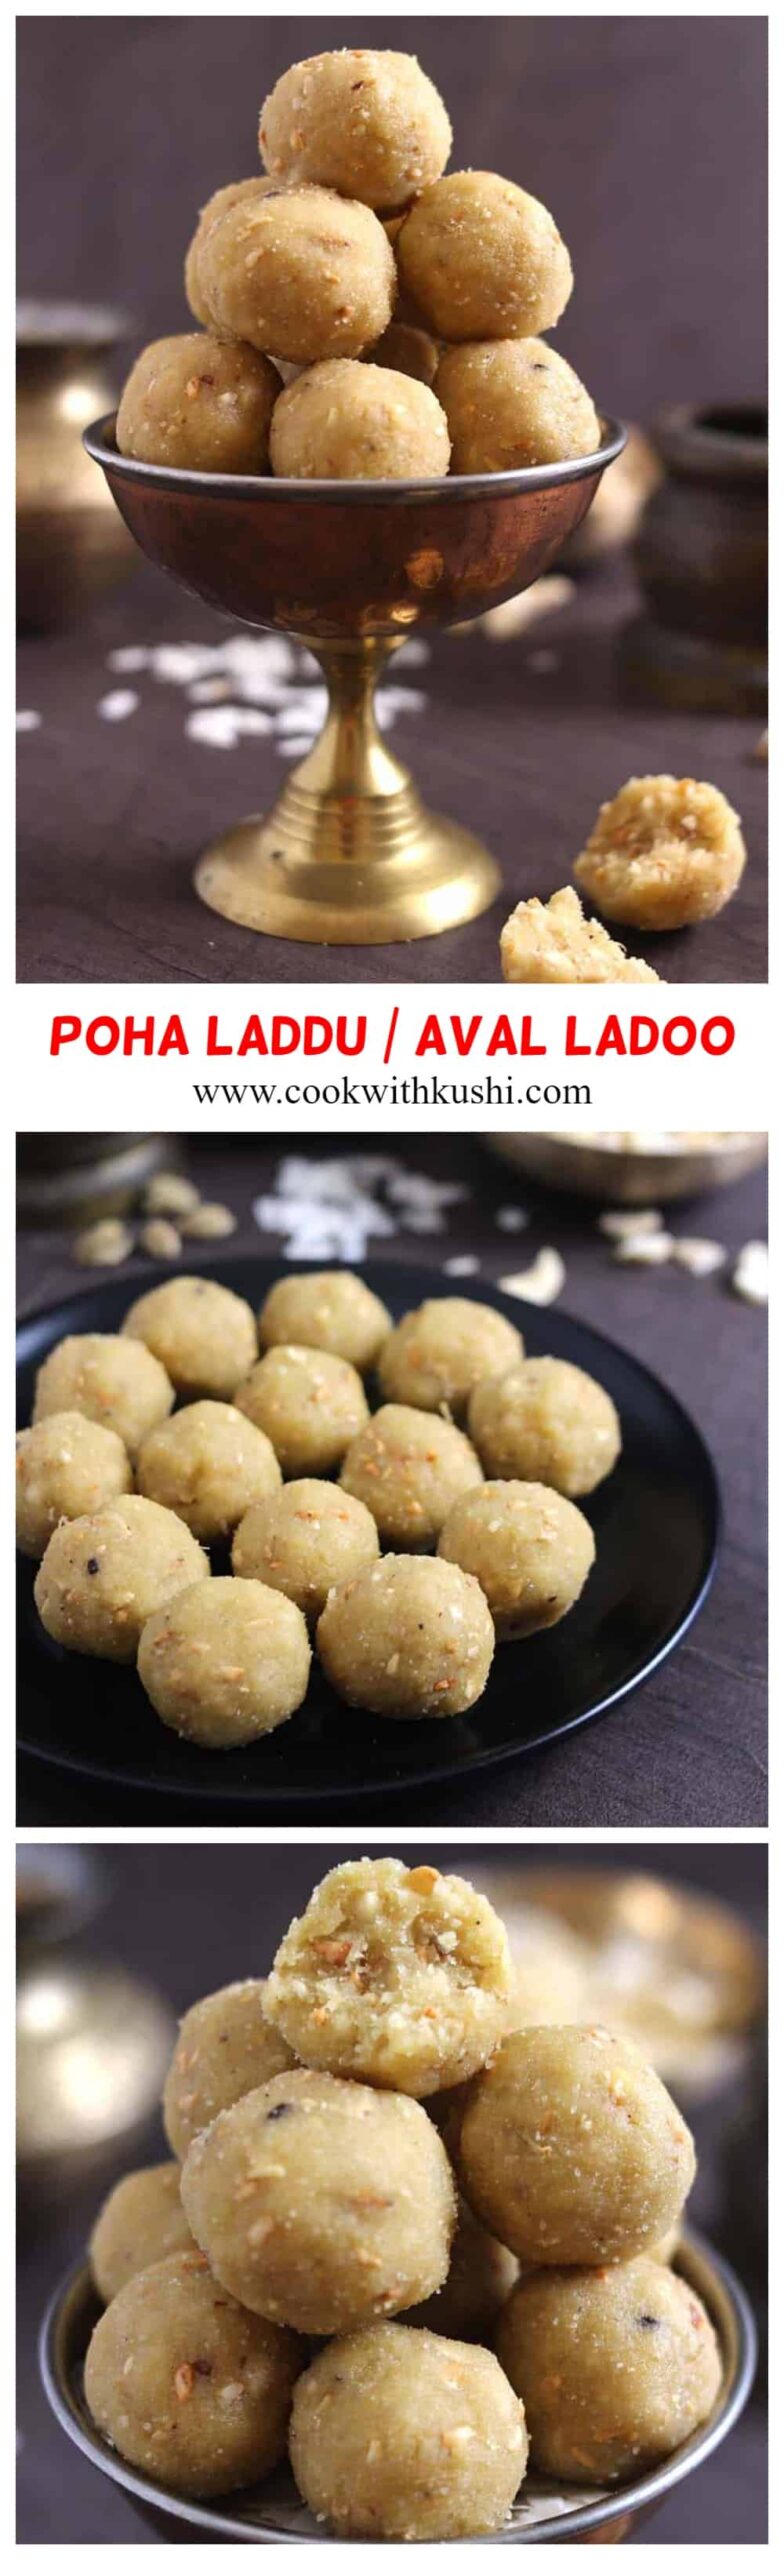 How to make poha laddu with jaggery #laddu #ladoo #laddoo